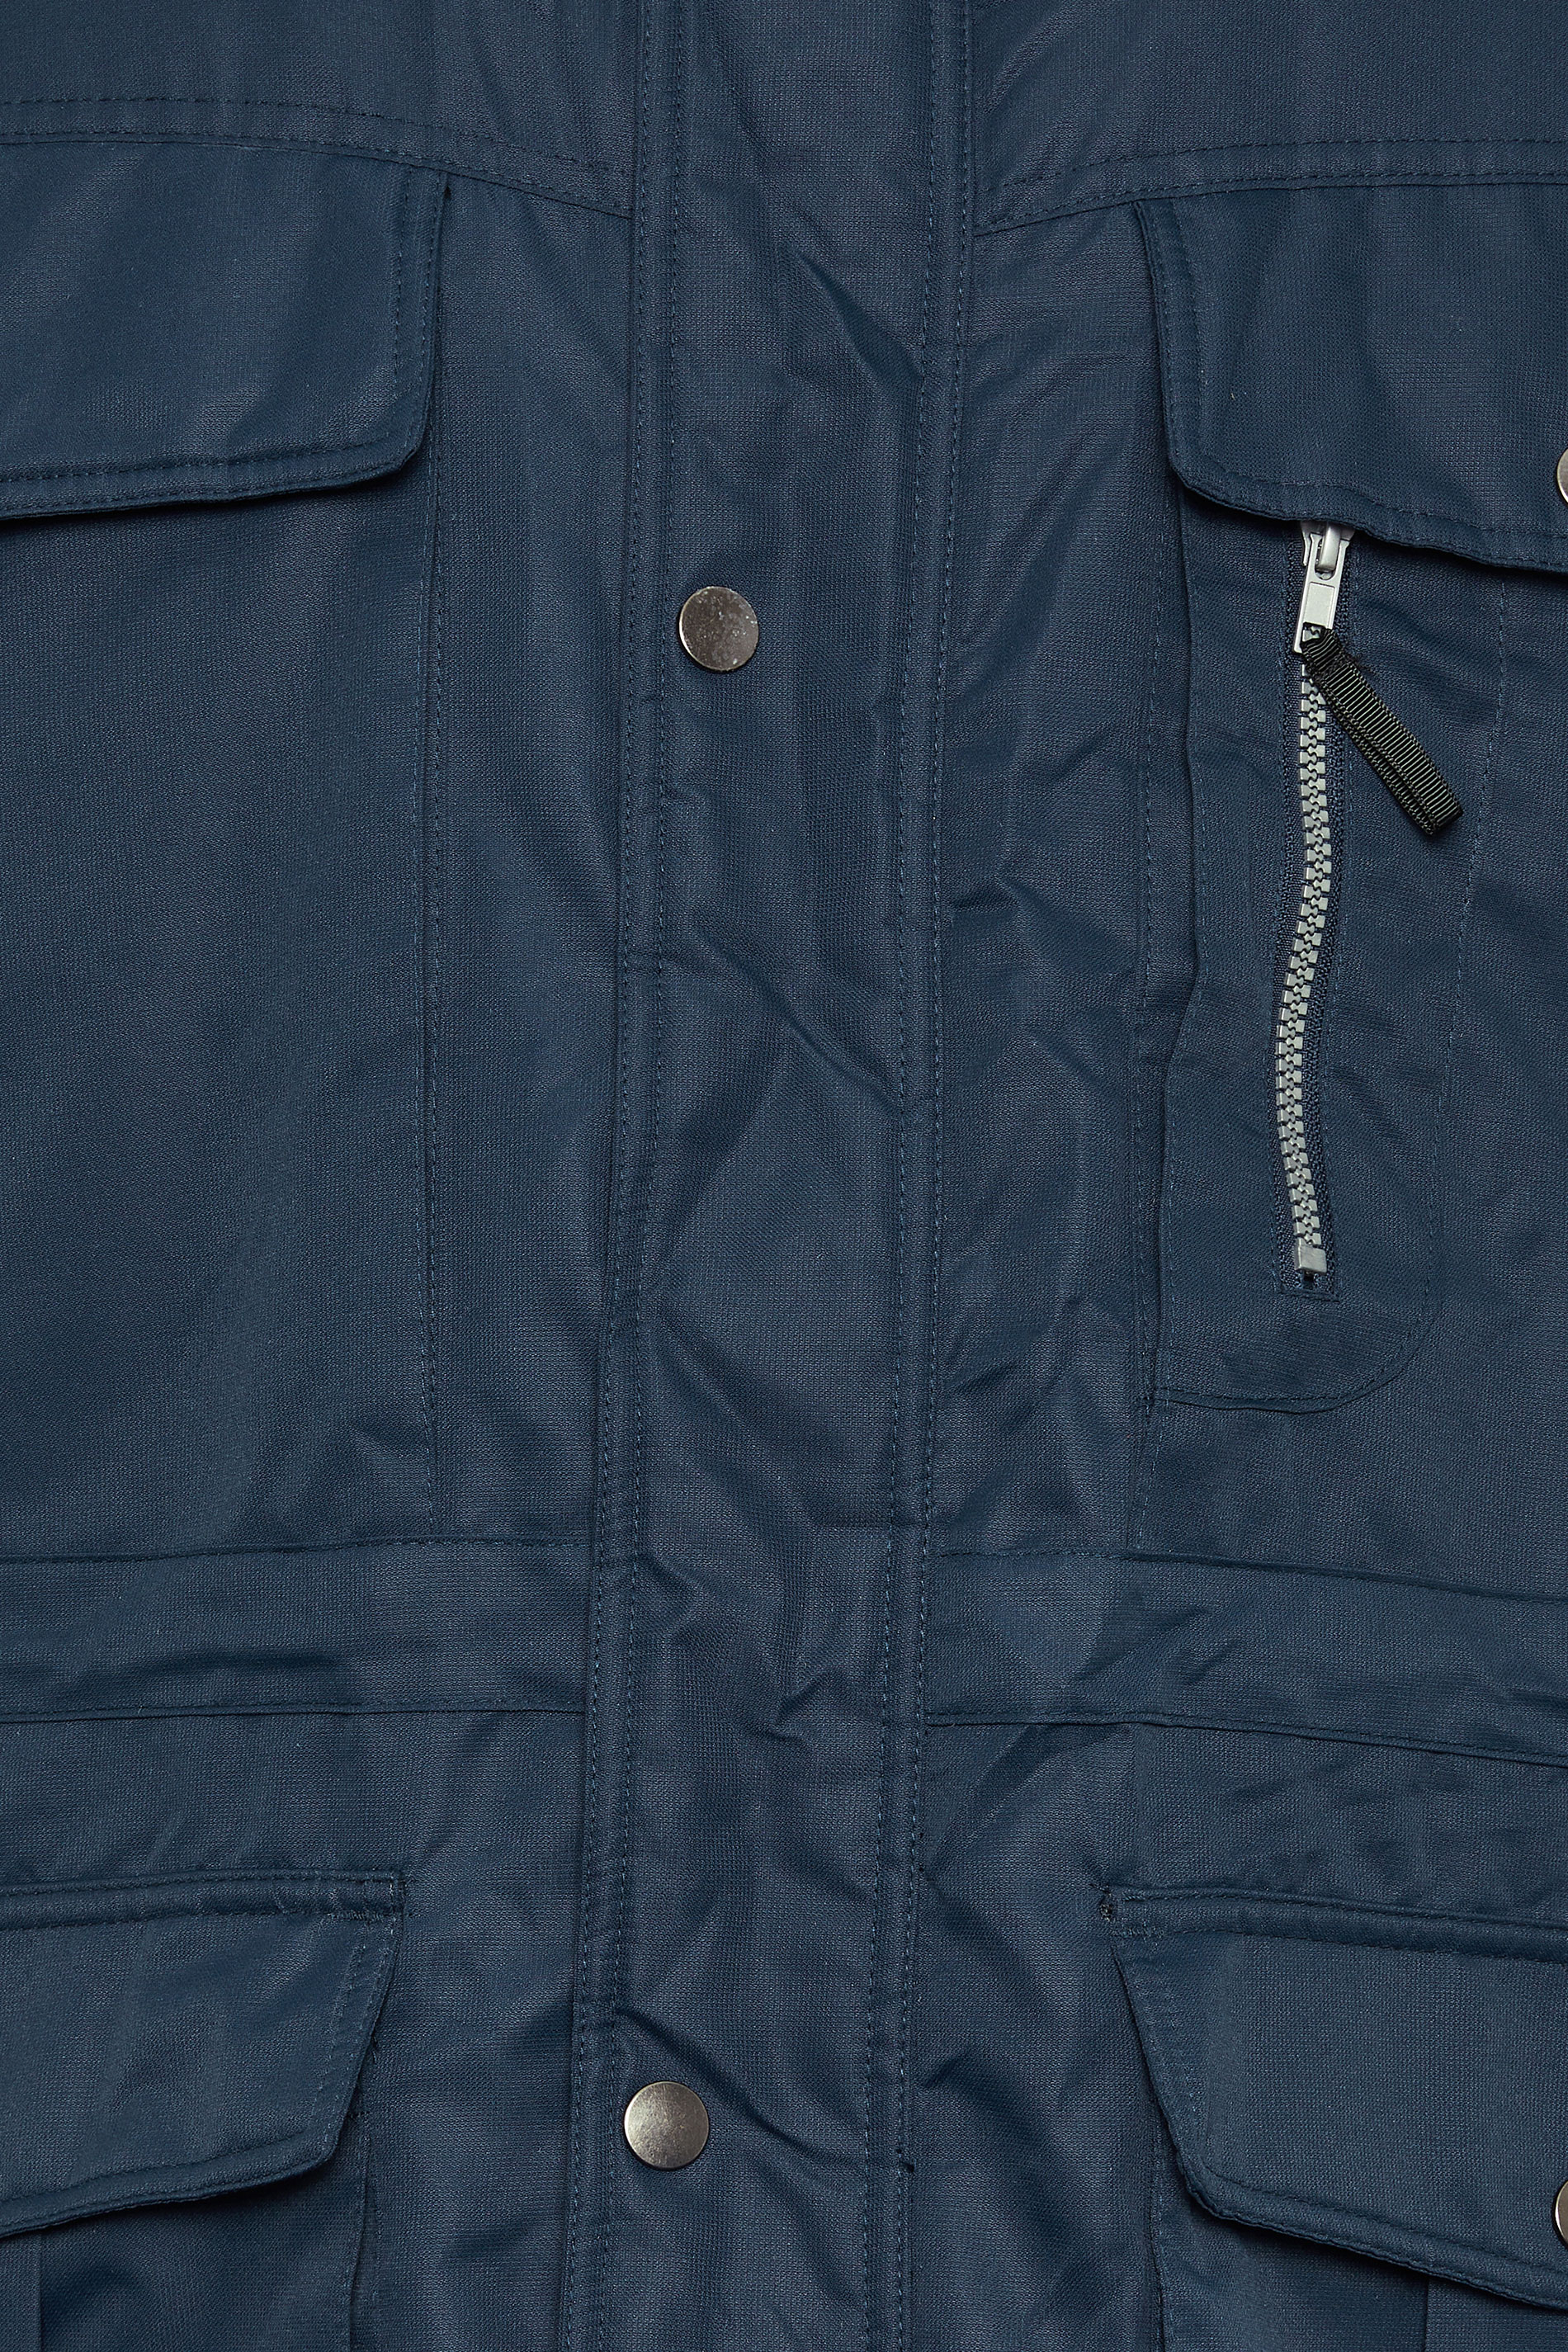 BadRhino Big & Tall Navy Blue Fleece Lined Hooded Coat | BadRhino 3